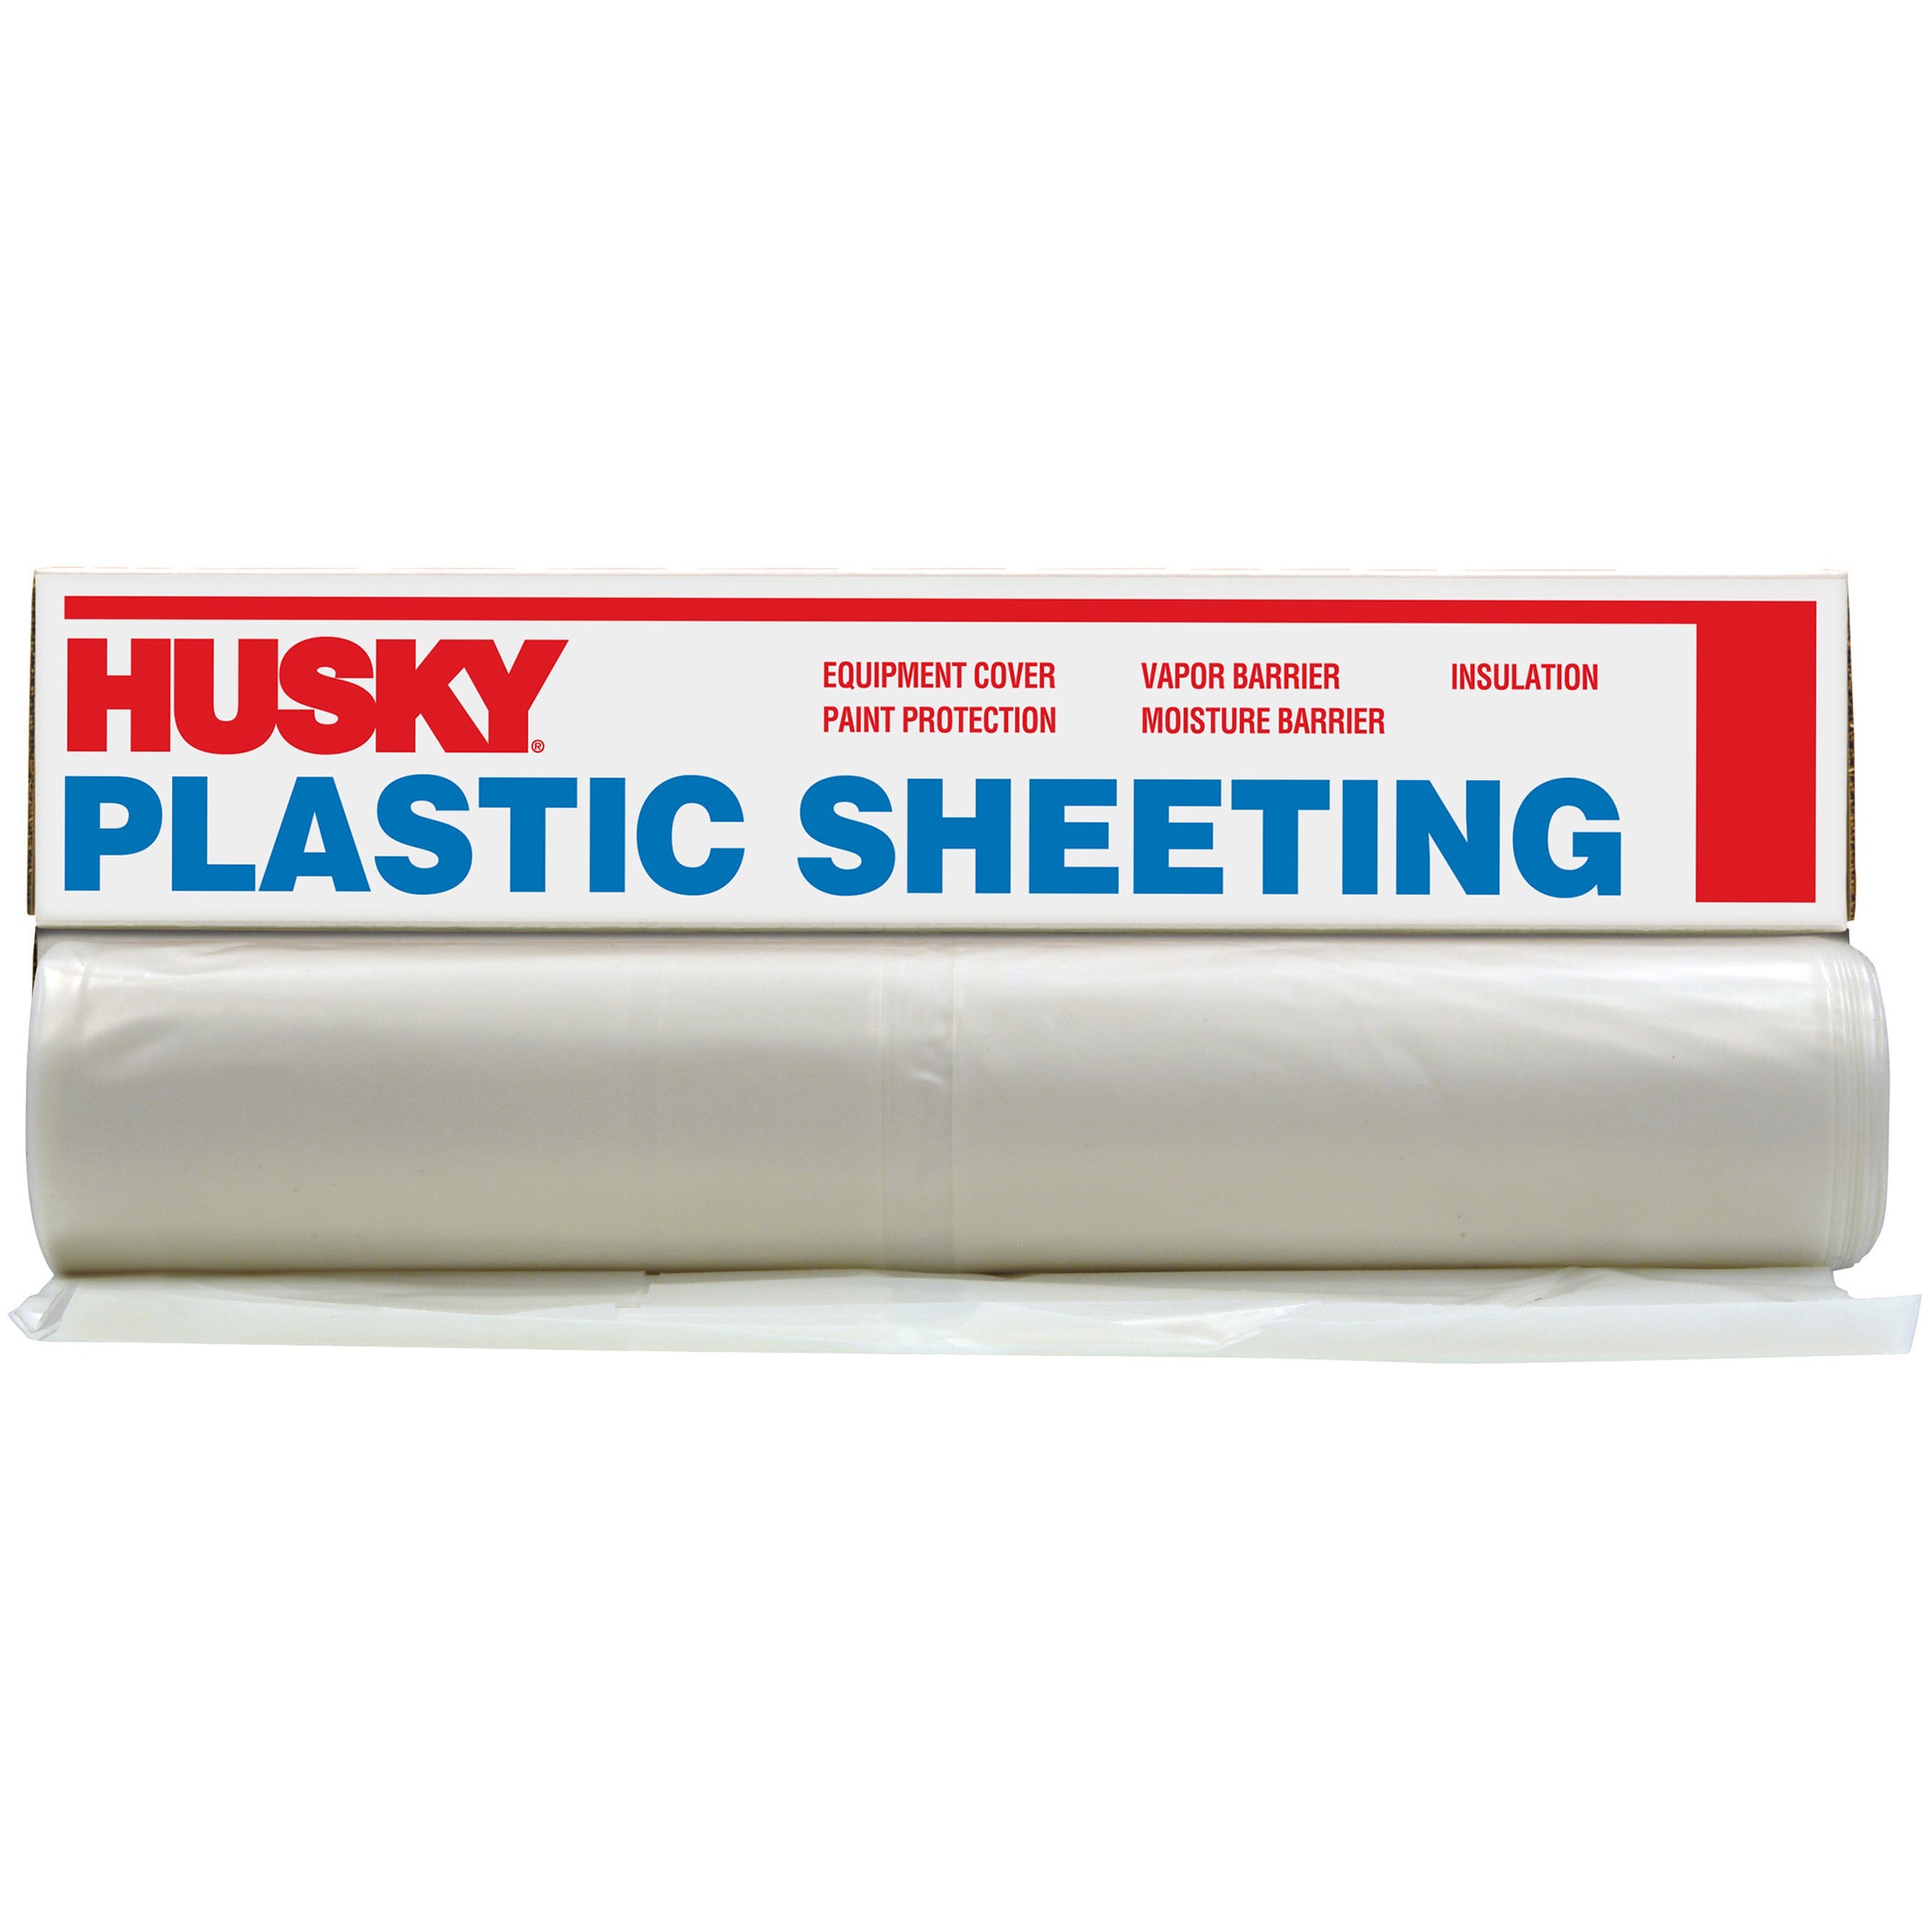 Hky 4 mL Polyethylene Opaque Plastic Sheeting, 6' x 100' - image 2 of 2